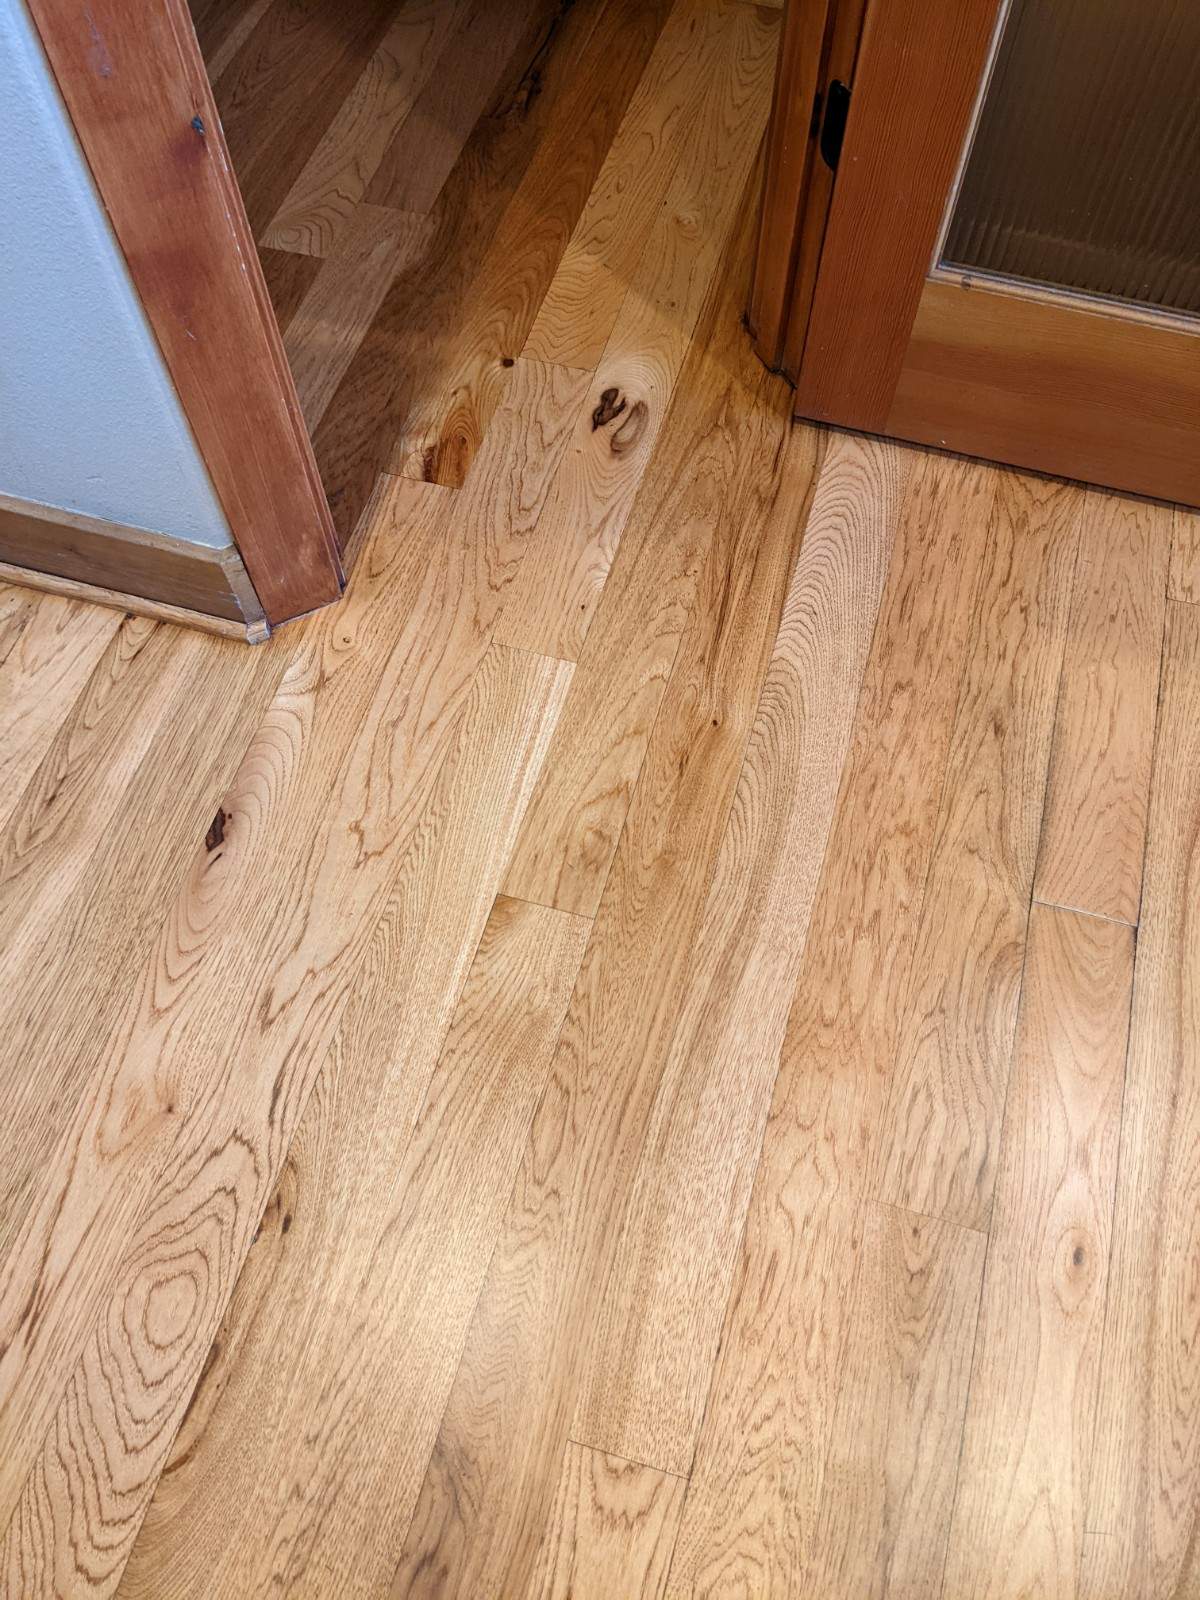 Hardwood Floor After wax removal Bend, Oregon